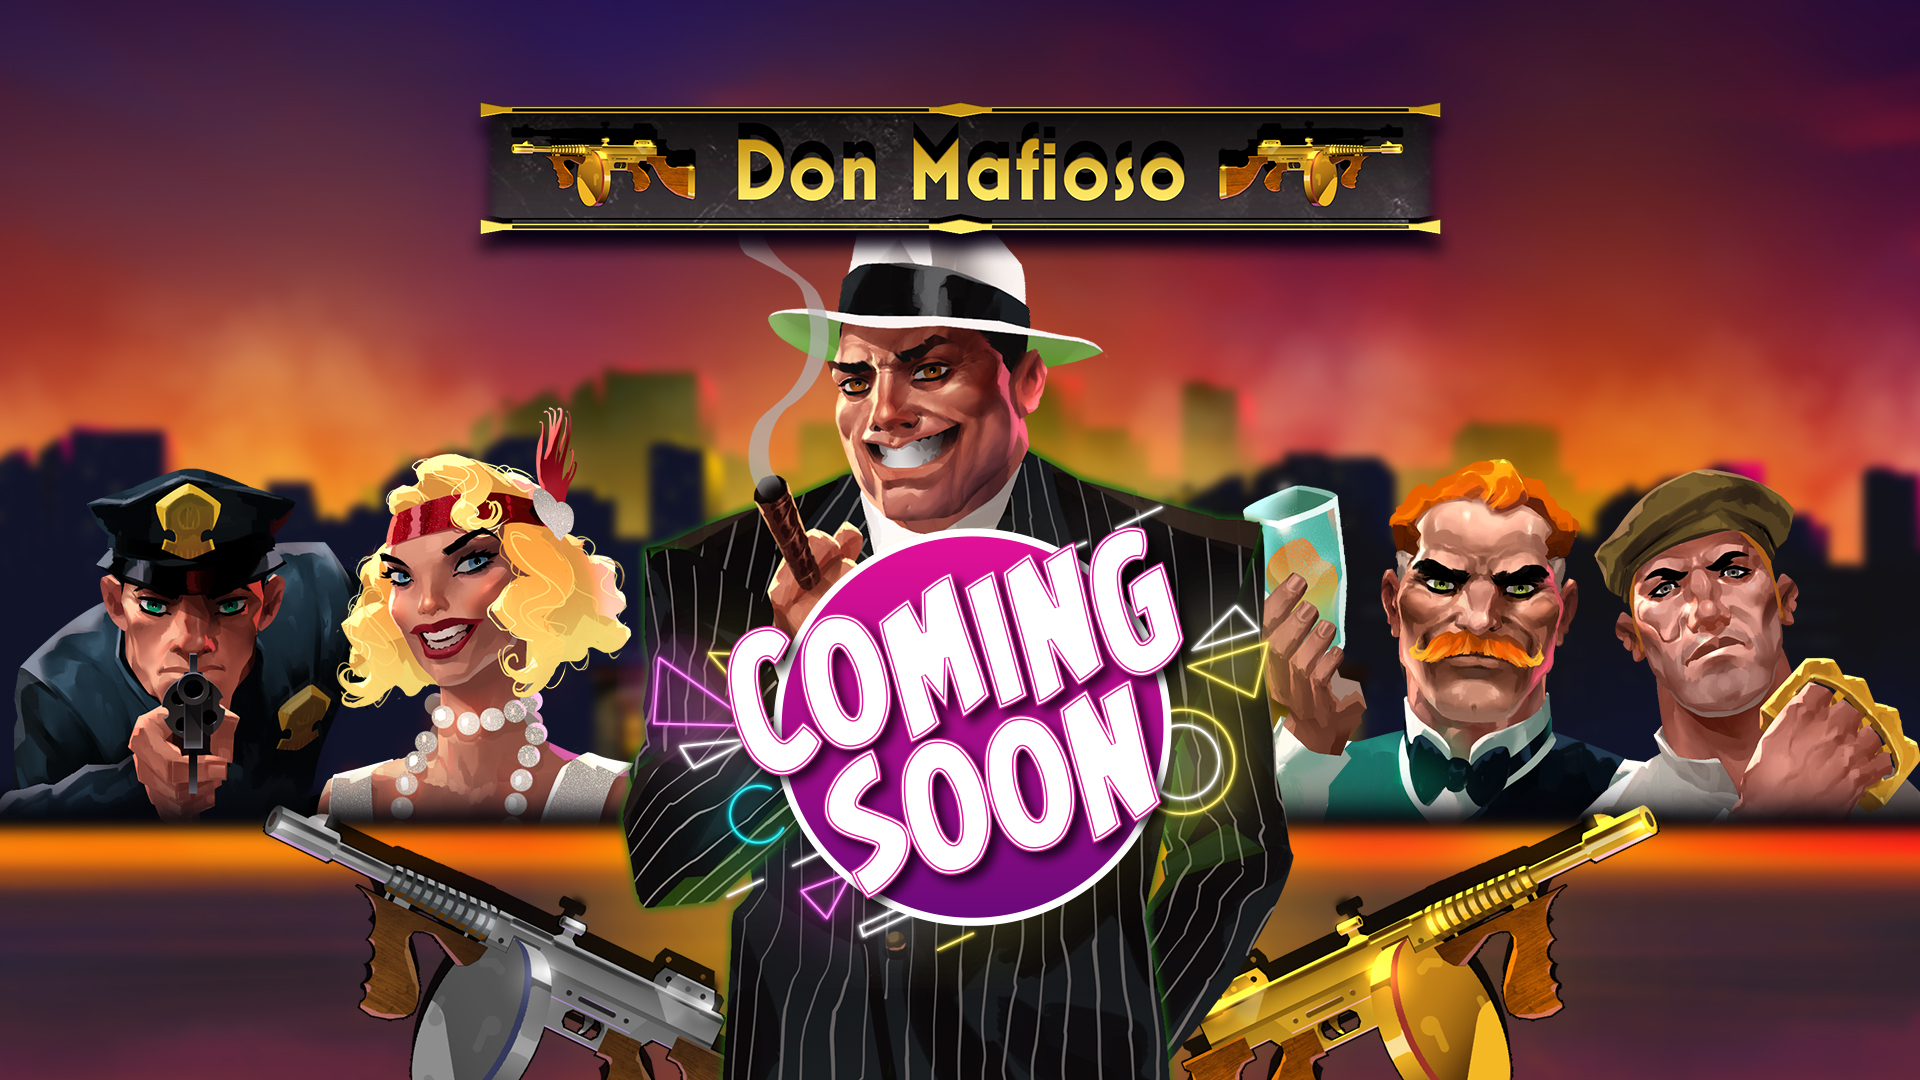 don_mafiozo_coming_soon